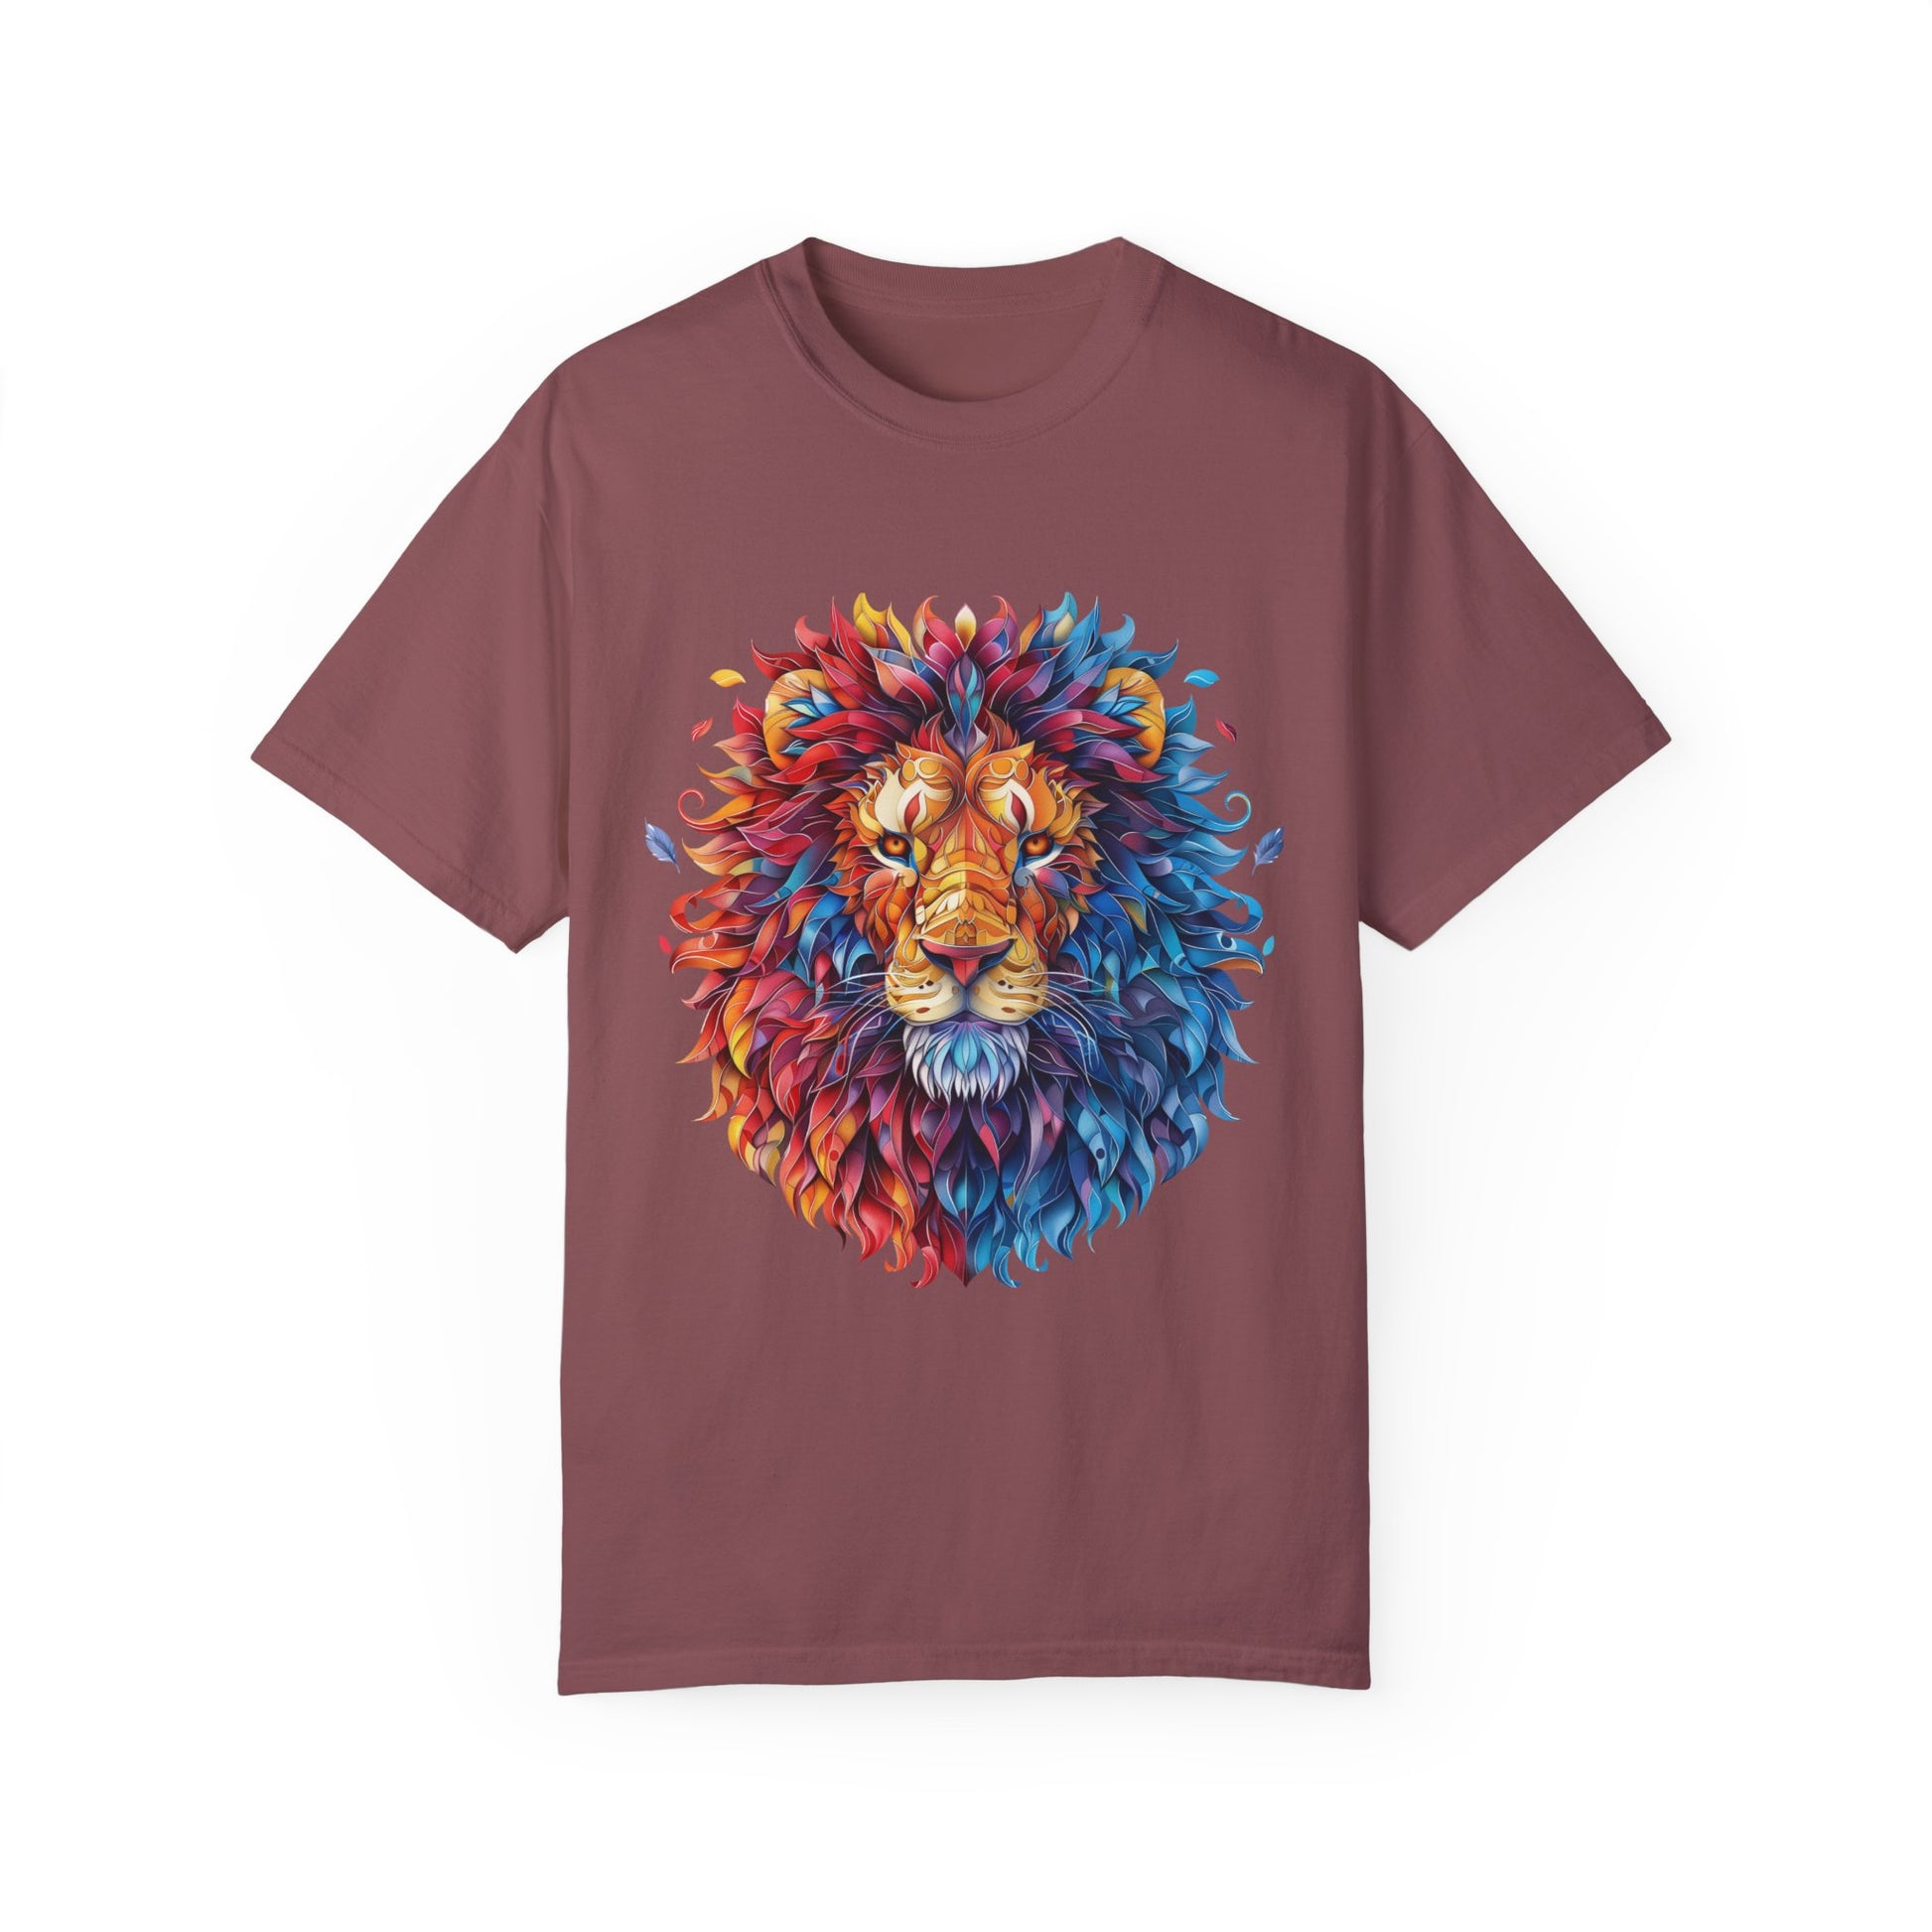 Lion Head Cool Graphic Design Novelty Unisex Garment-dyed T-shirt Cotton Funny Humorous Graphic Soft Premium Unisex Men Women Brick T-shirt Birthday Gift-5